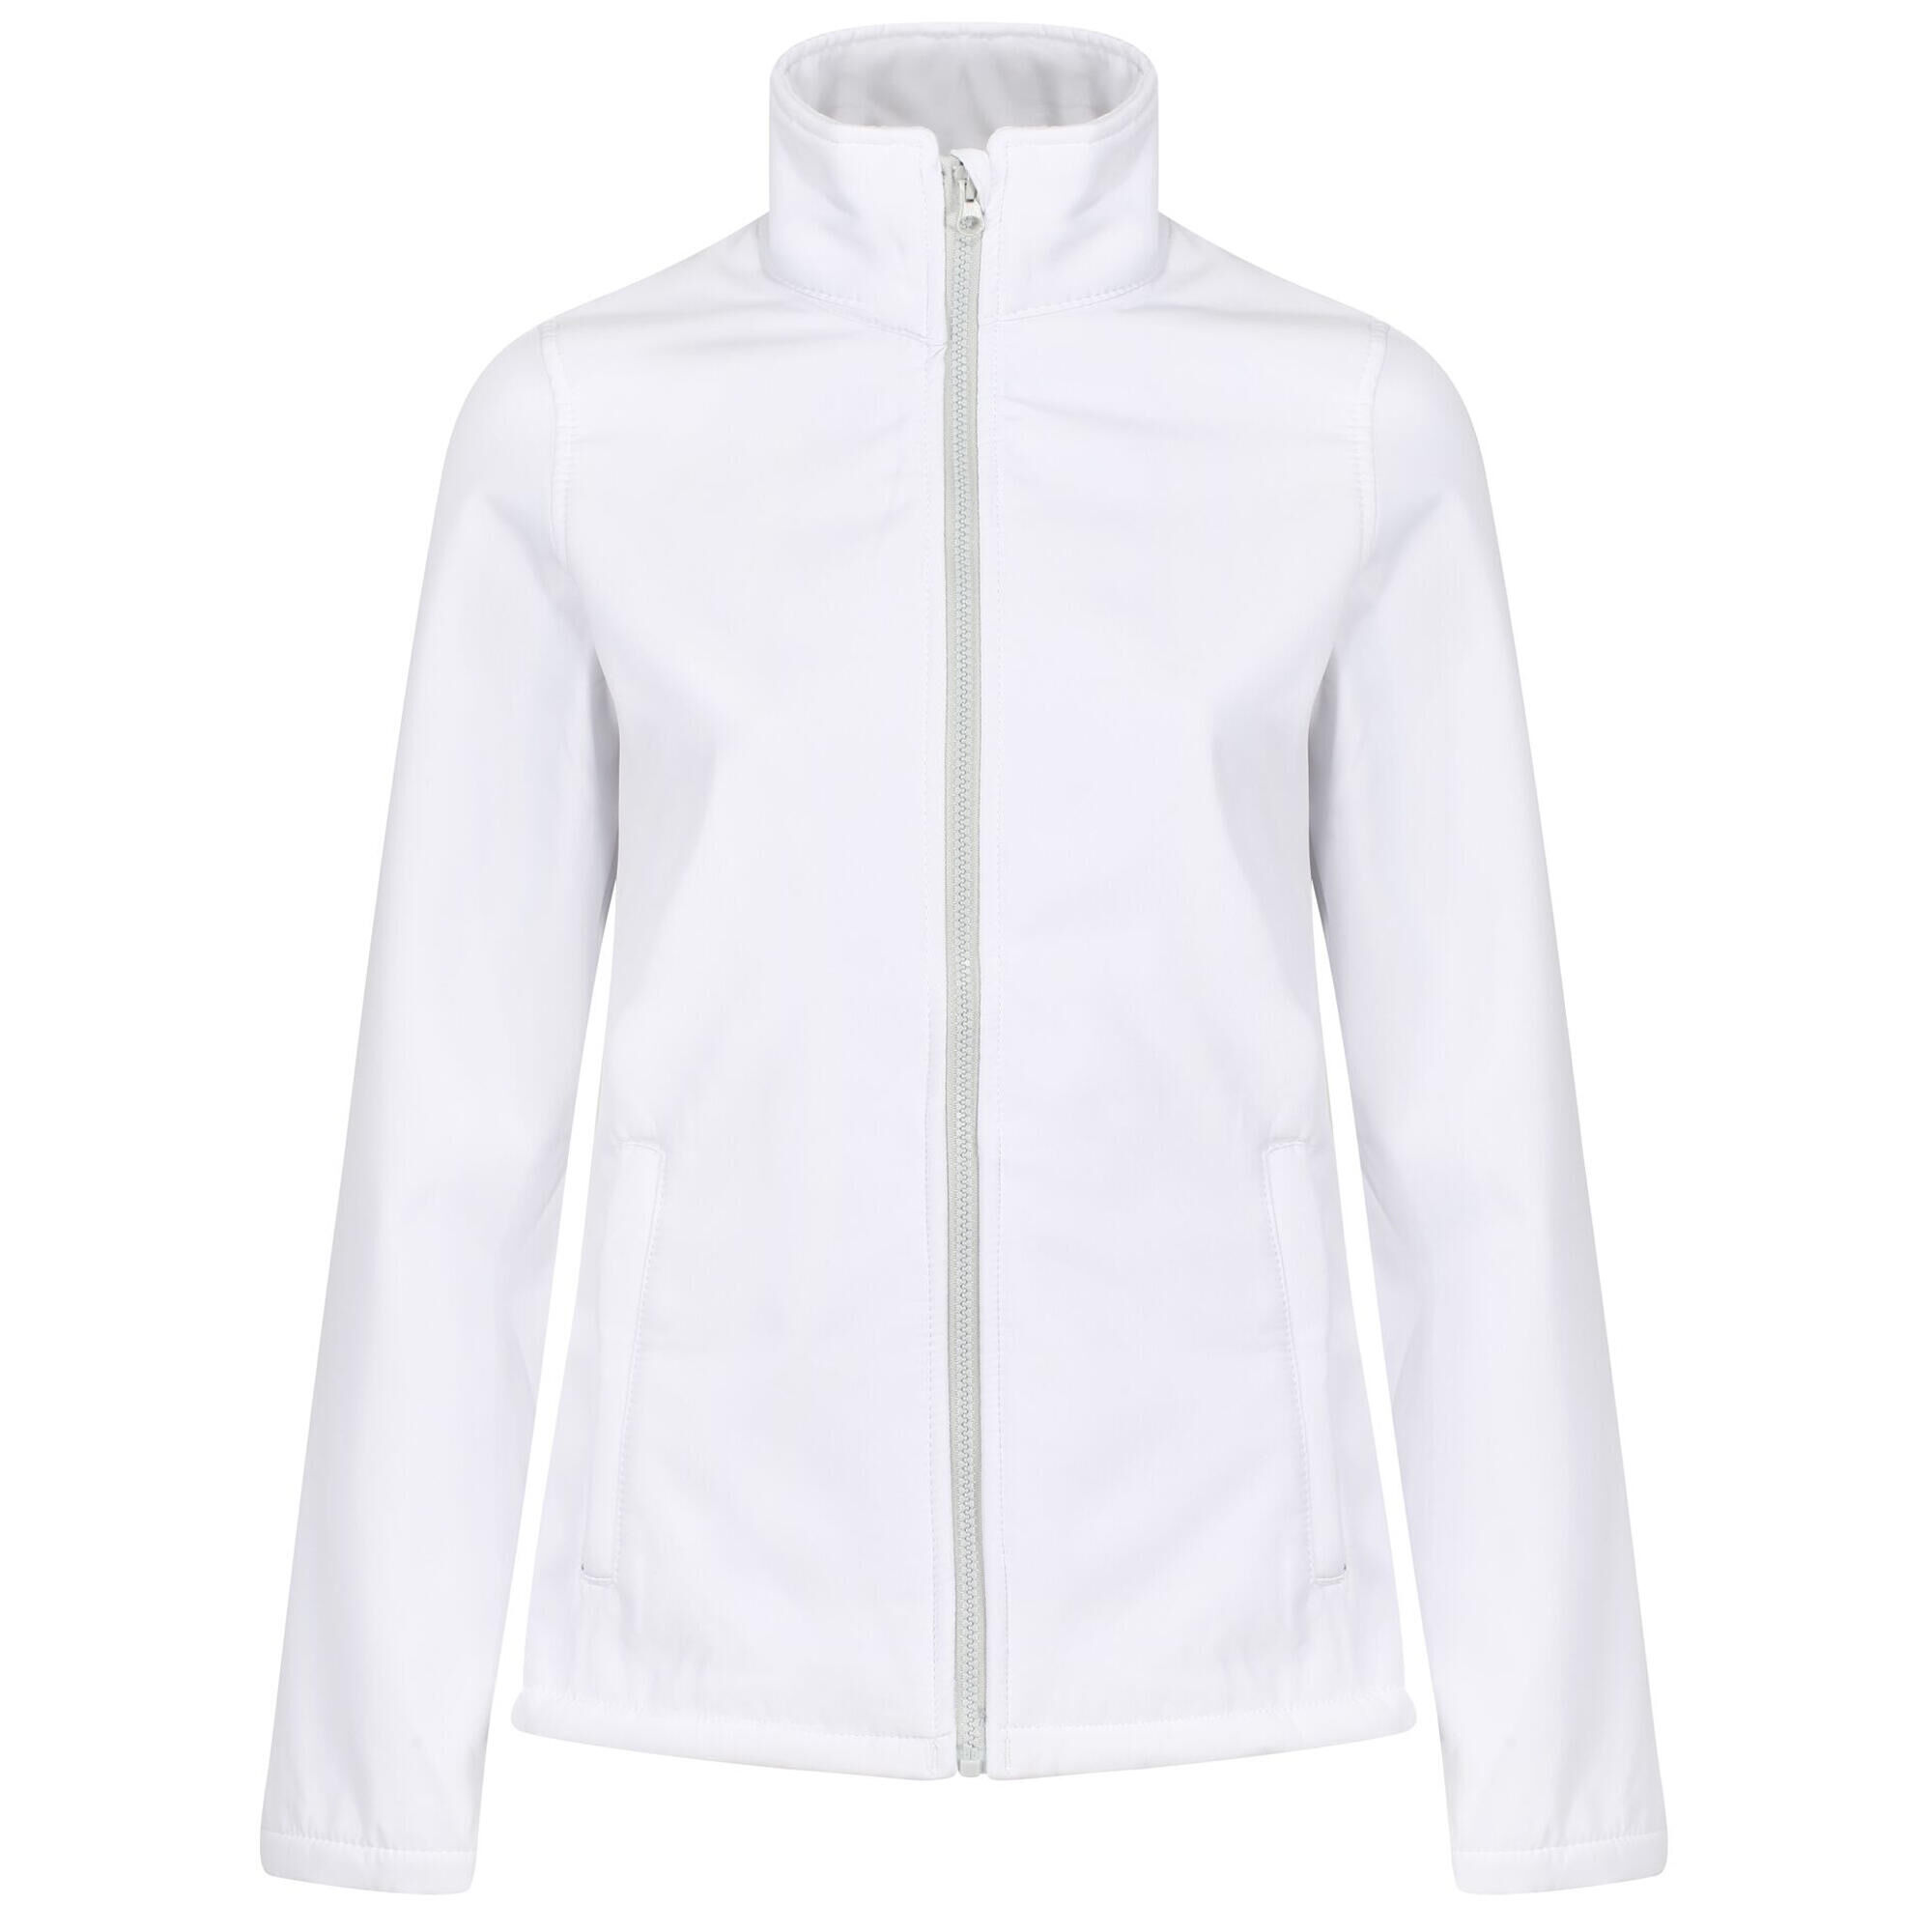 REGATTA Womens/Ladies Ablaze Printable Softshell Jacket (White/Light Steel)